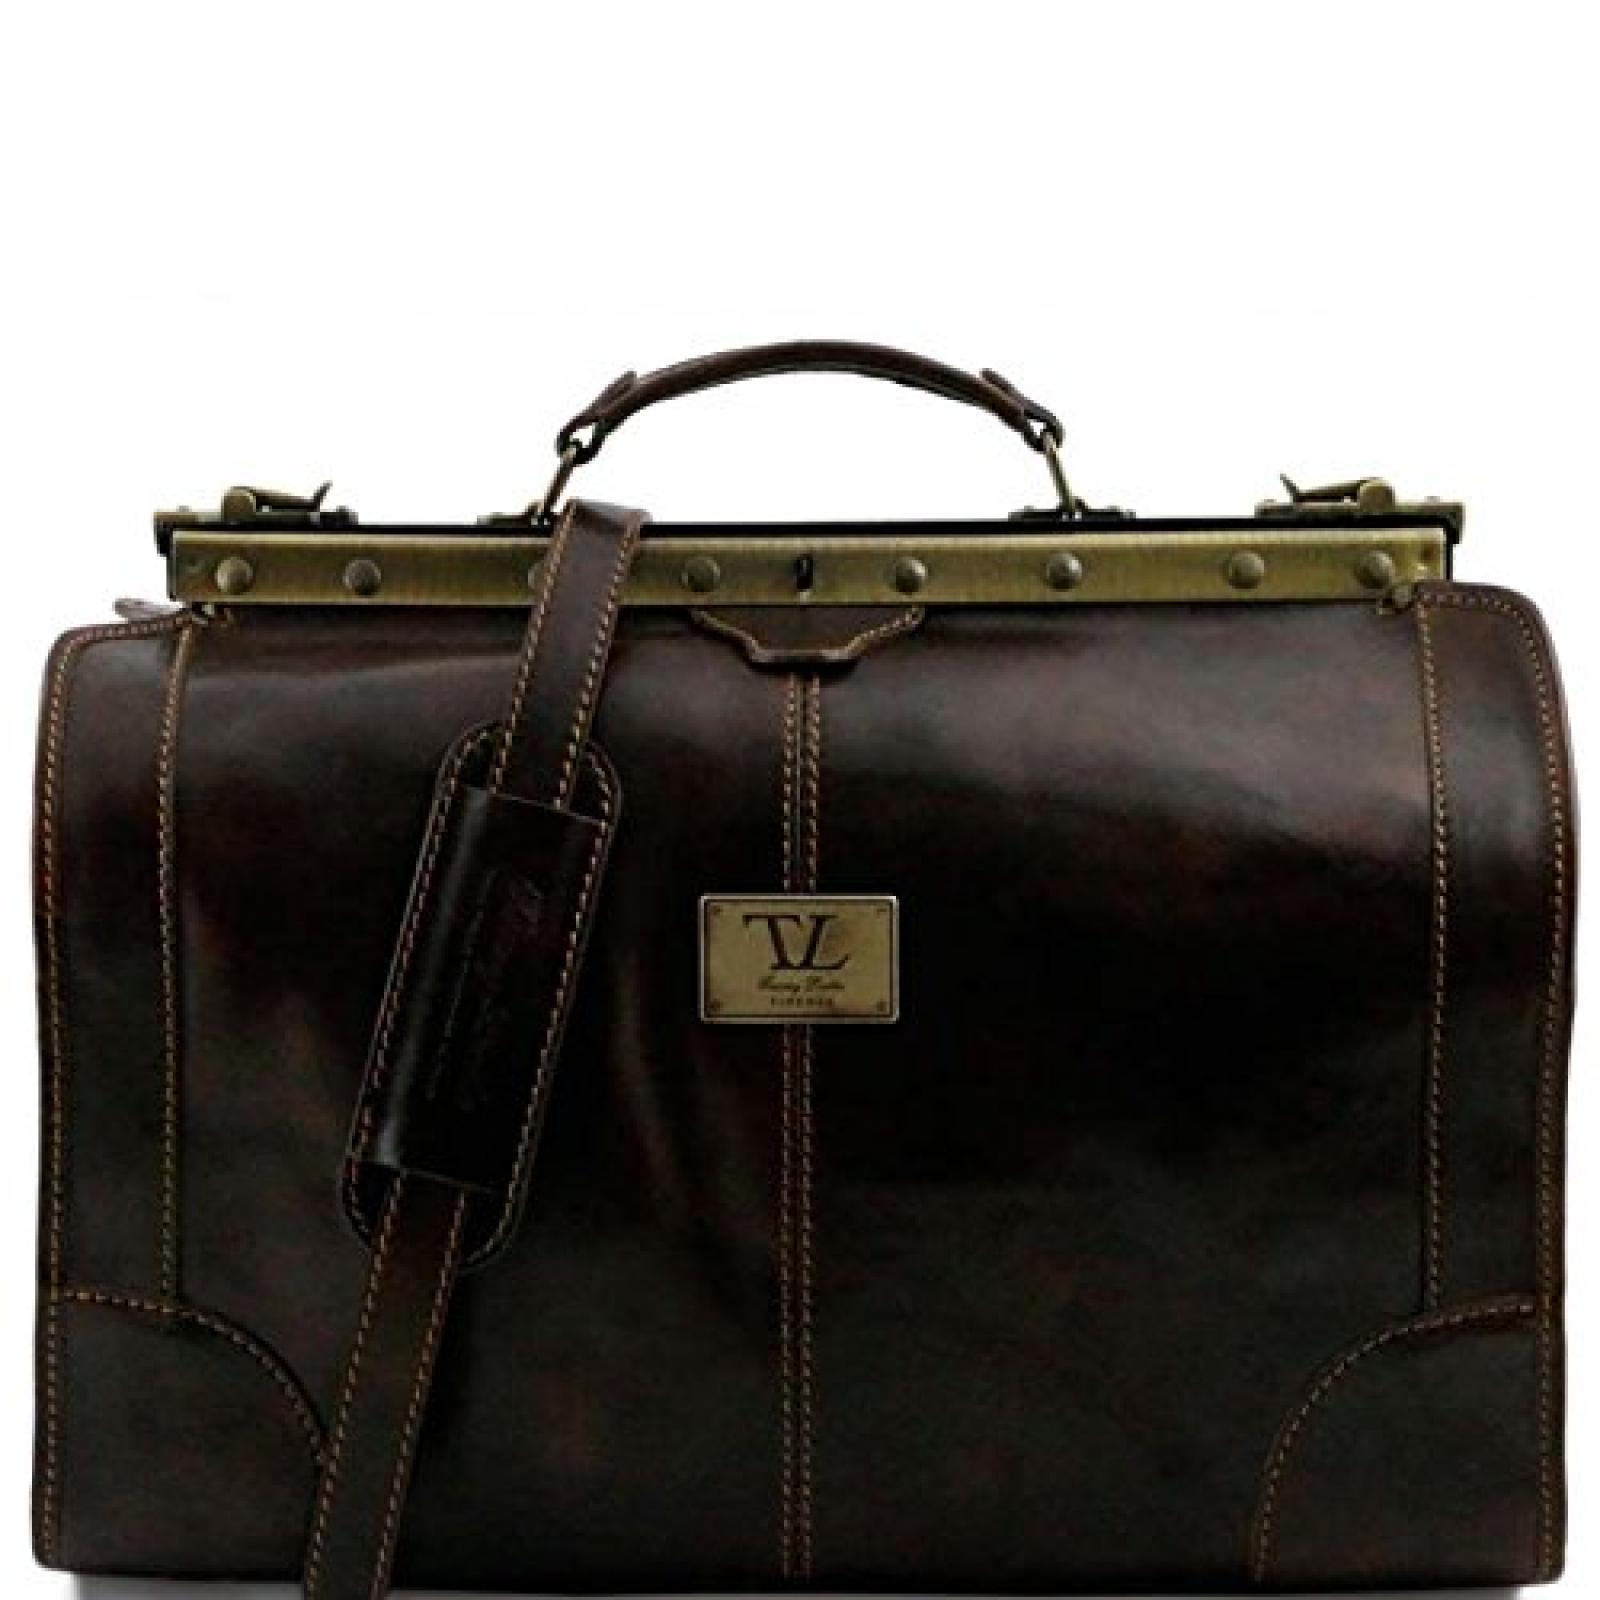 Tuscany Leather - Madrid - Maulbügelreisetasche aus Leder - Klein Dunkelbraun - TL1023/5 